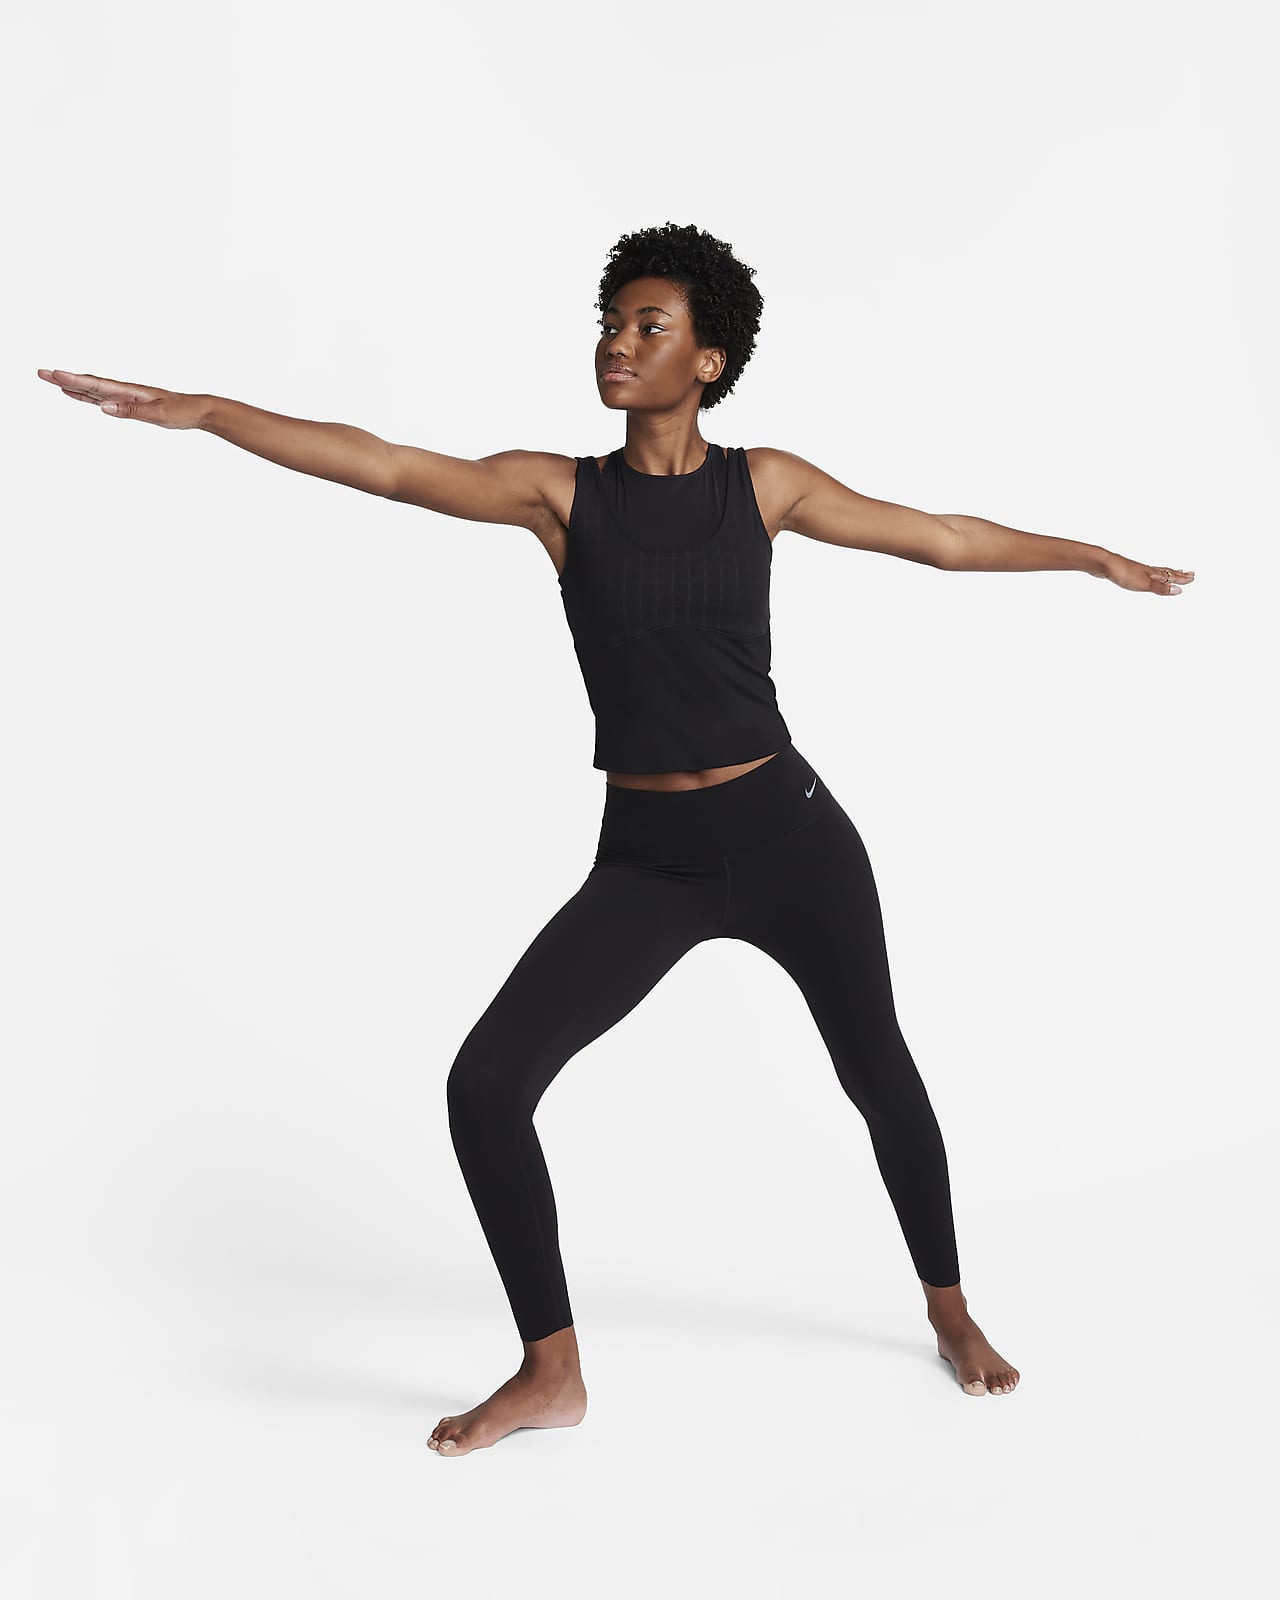 Nike Women's Yoga Twist Training Tank